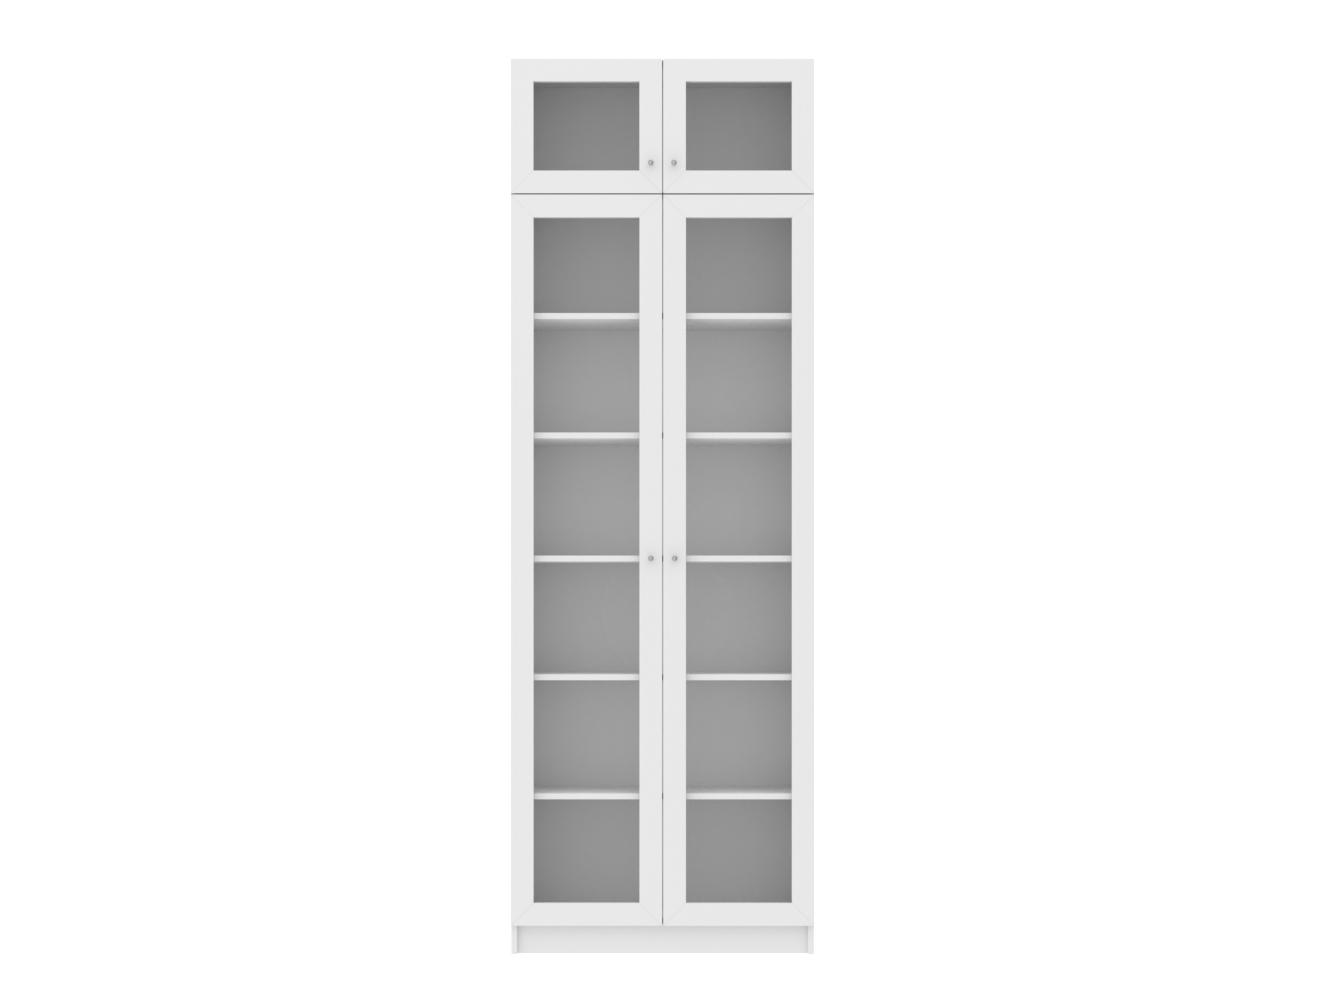  Книжный шкаф Билли 384 white ИКЕА (IKEA) изображение товара